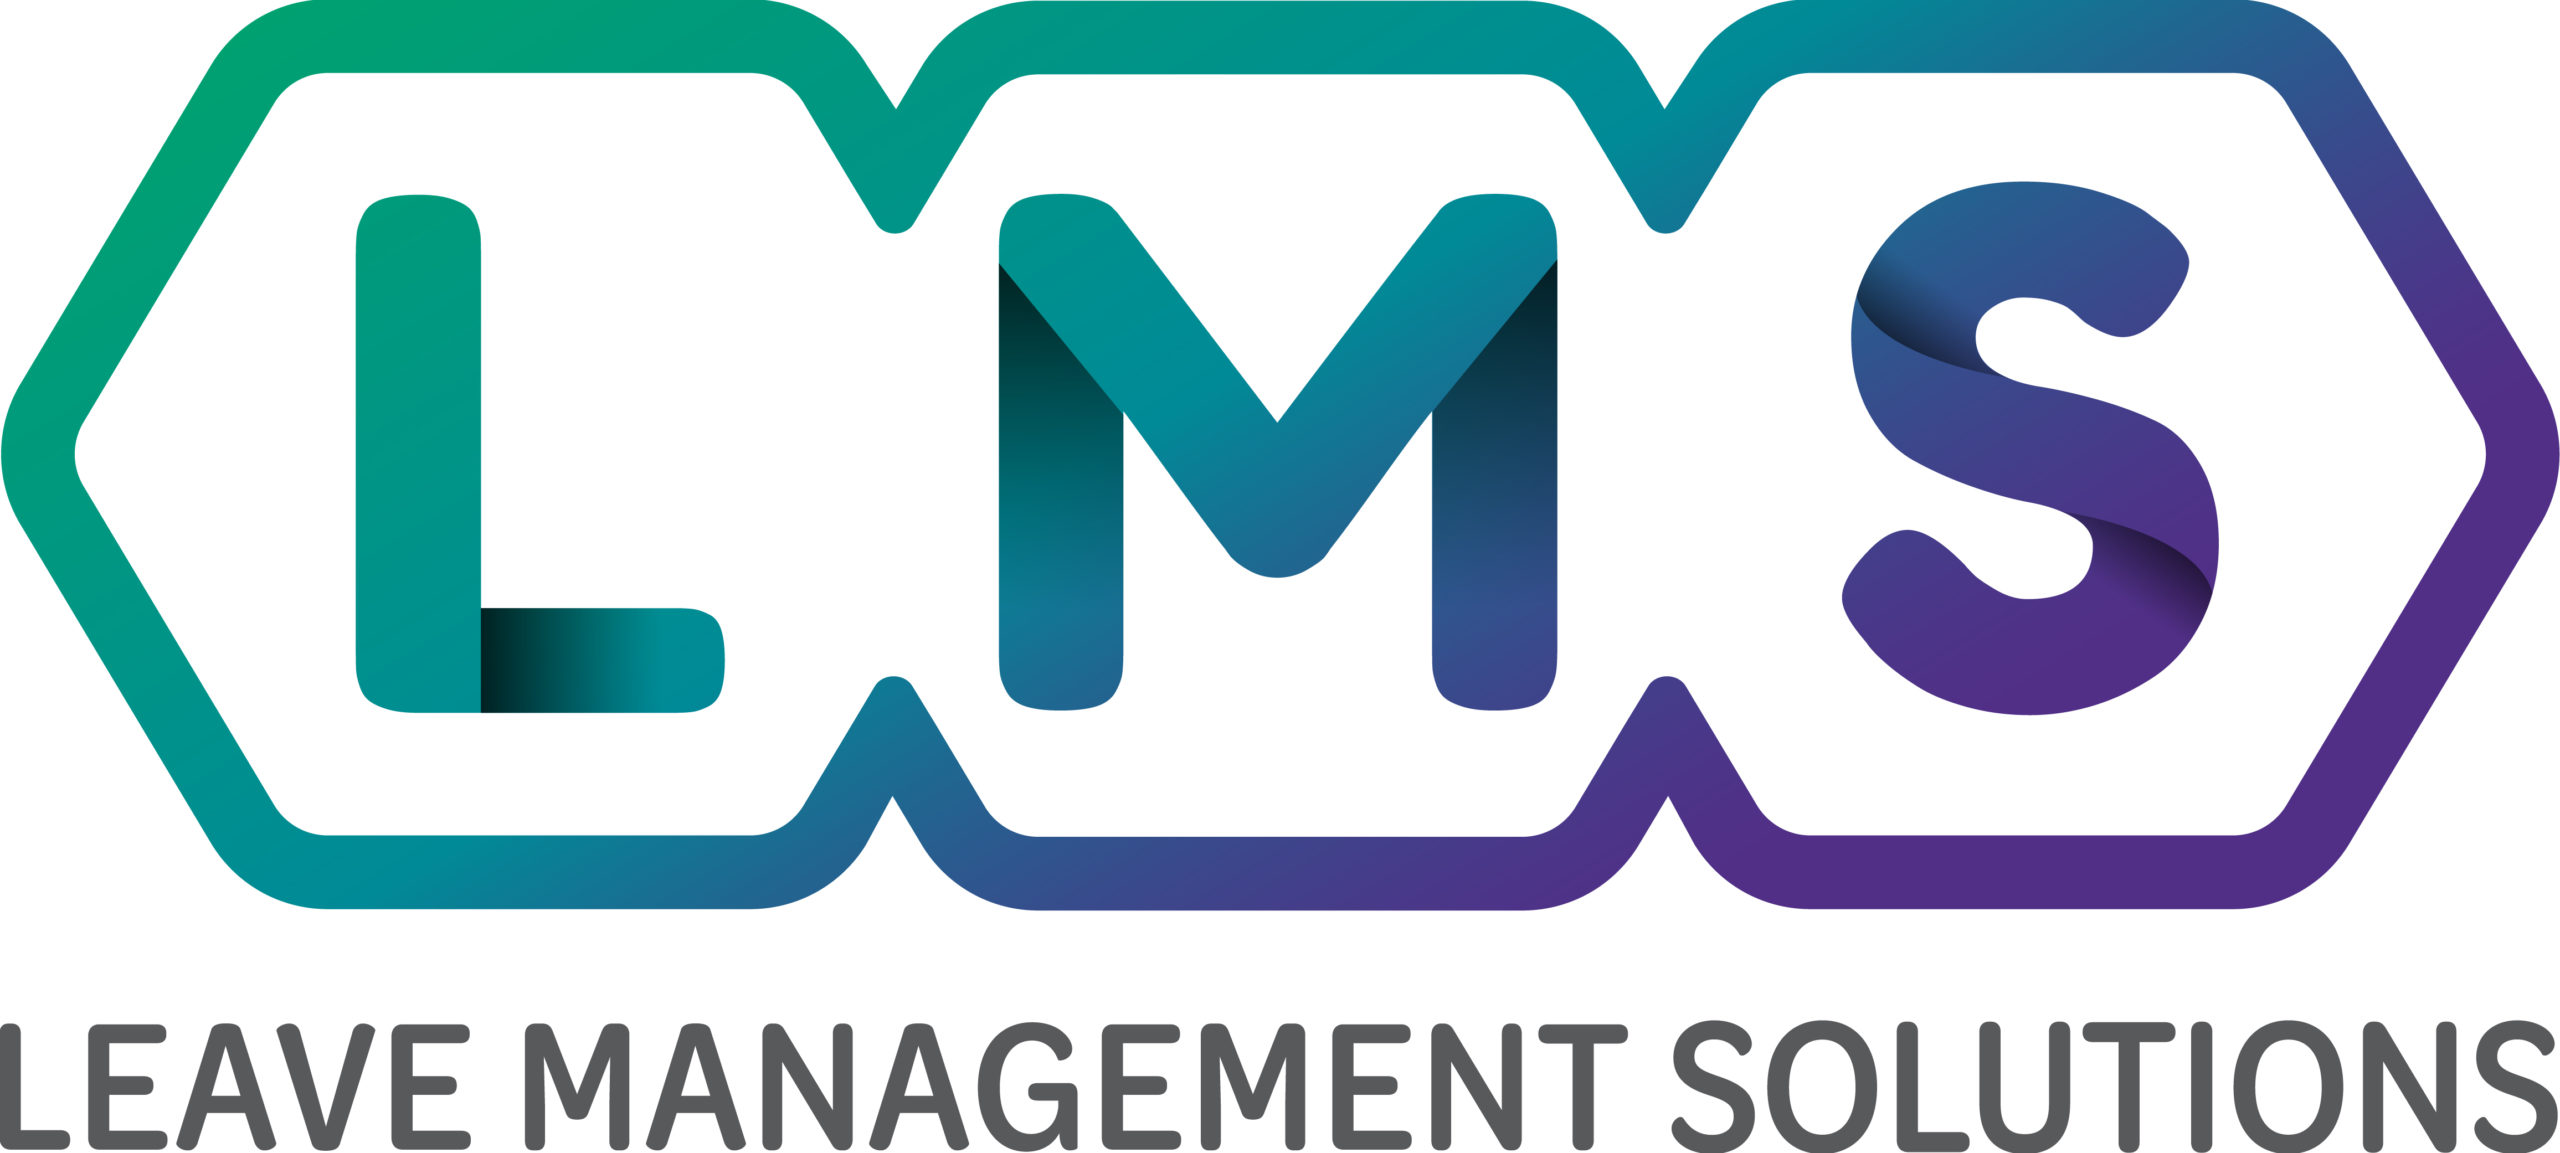 Leave Management Solutions Logo